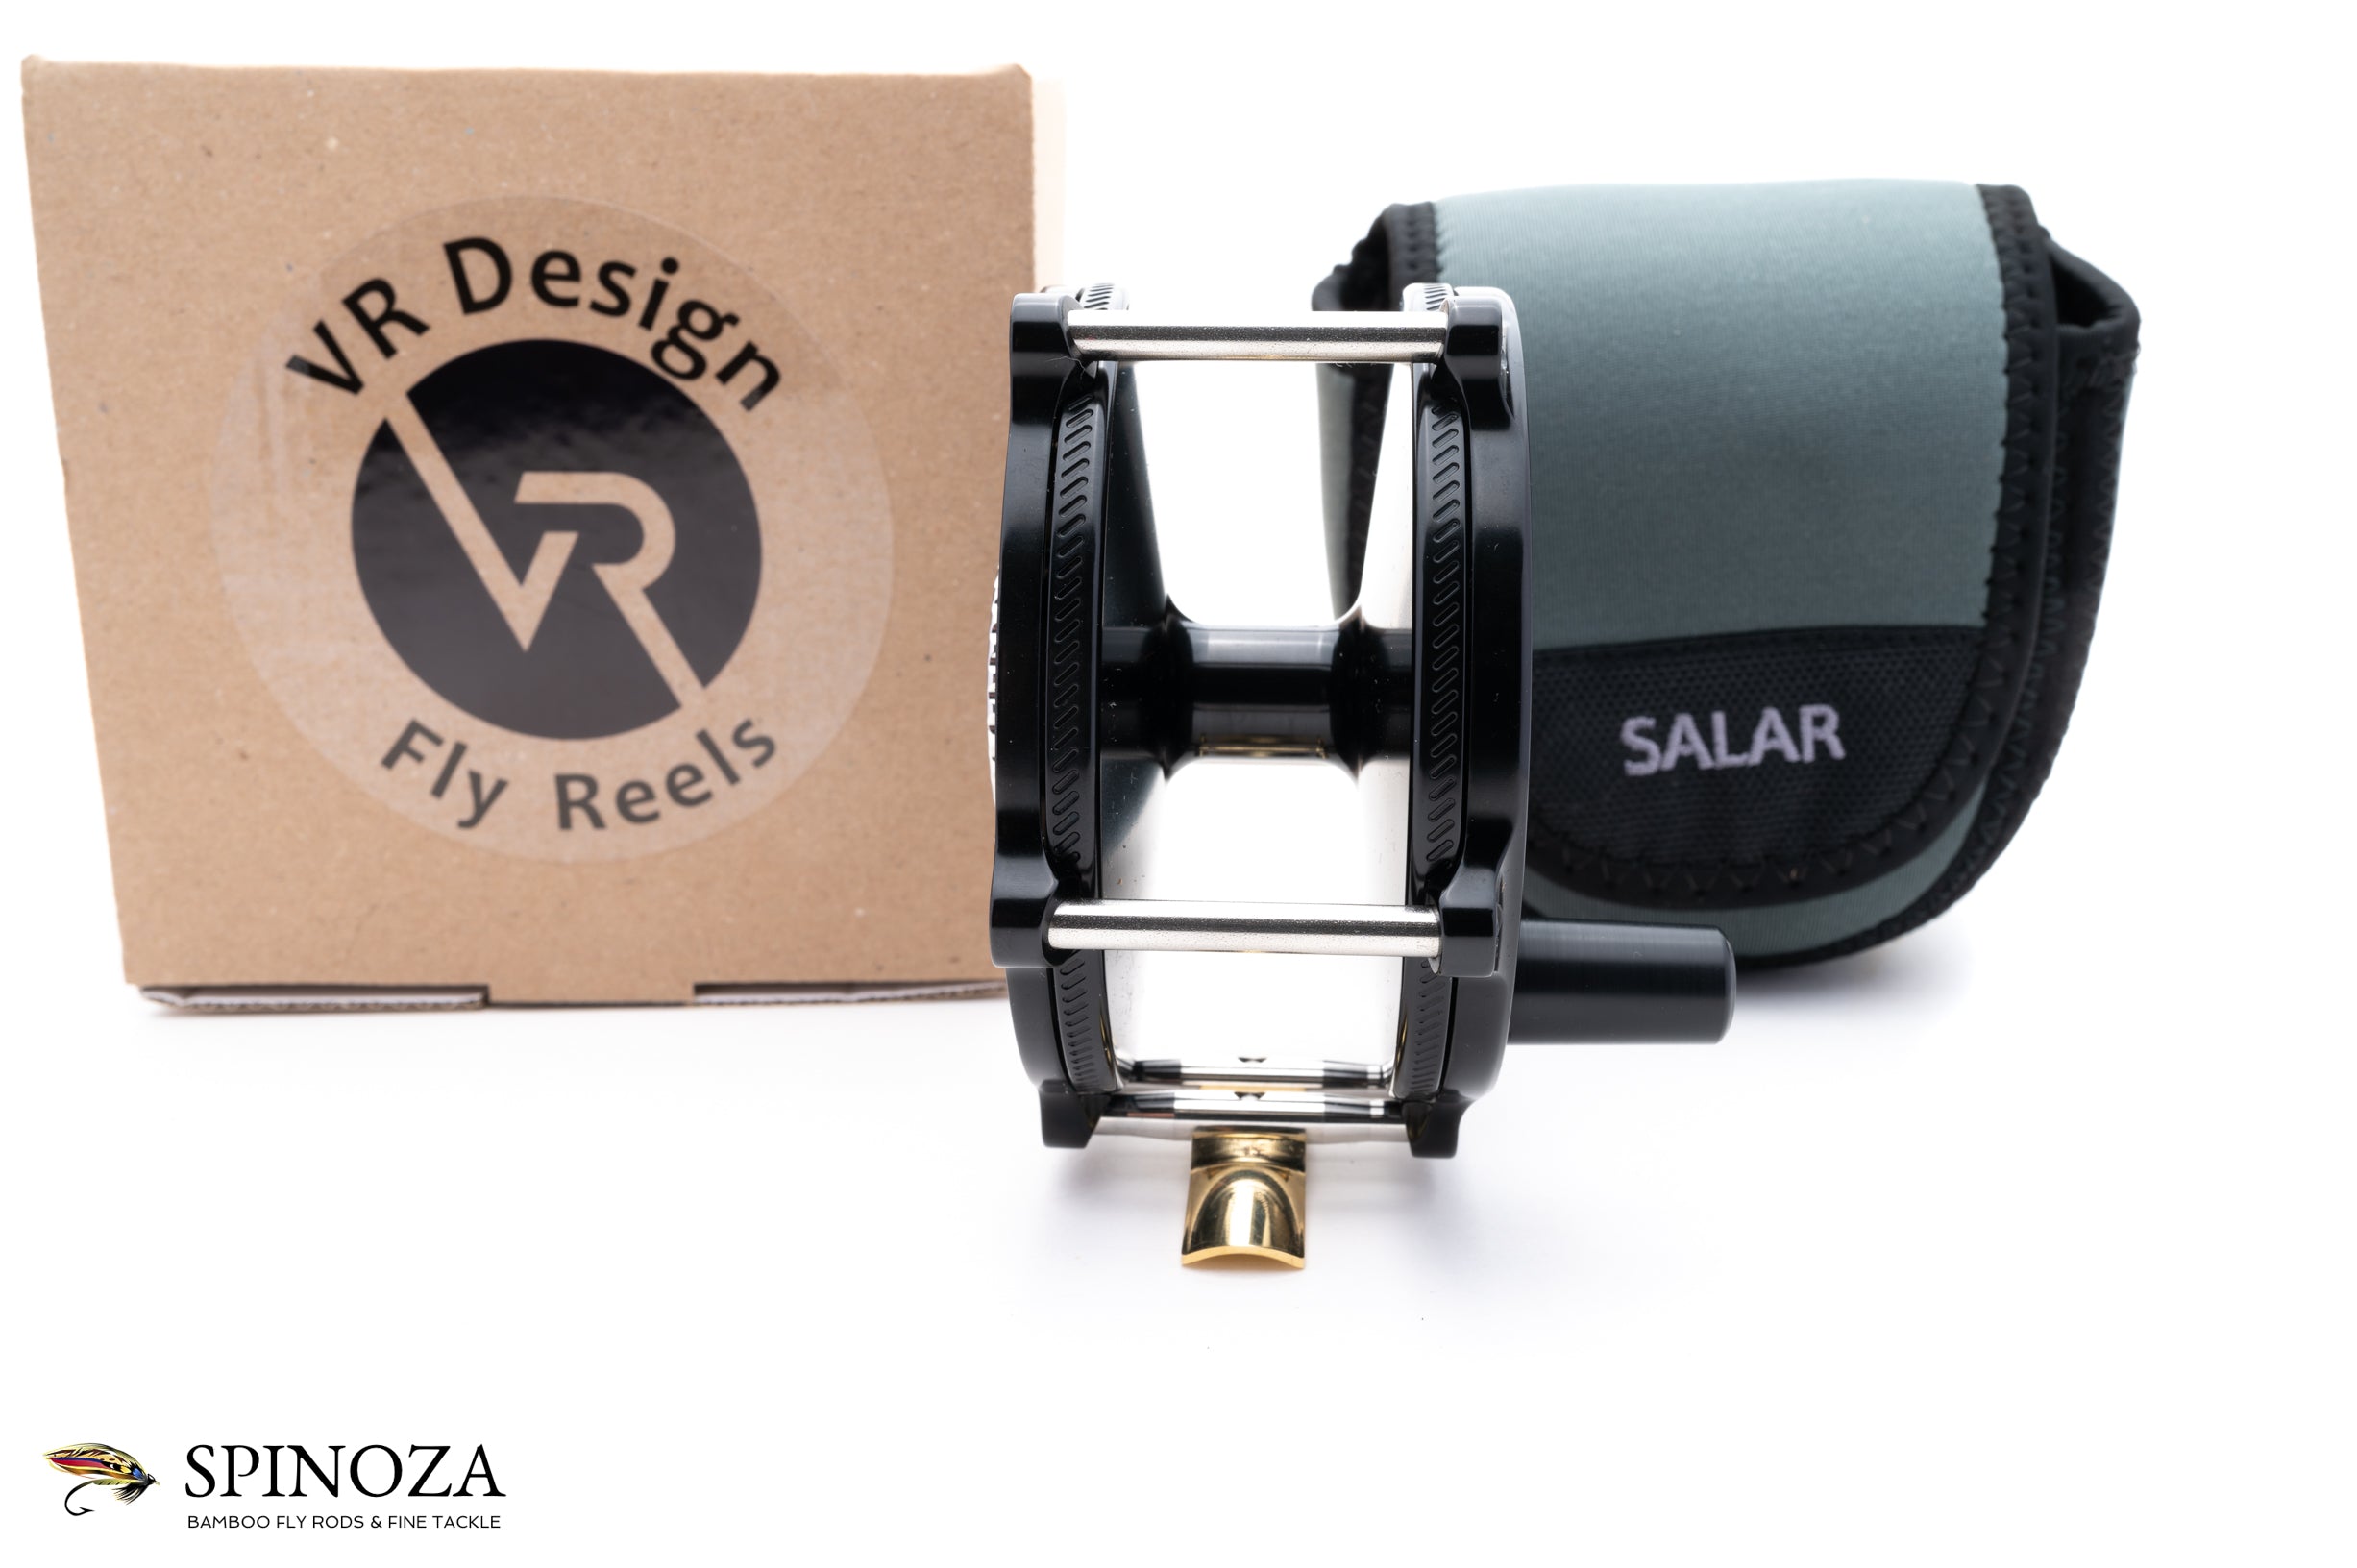 VR Design Salar Incomparabile Fly Reel 3 5/8” - Spinoza Rod Company